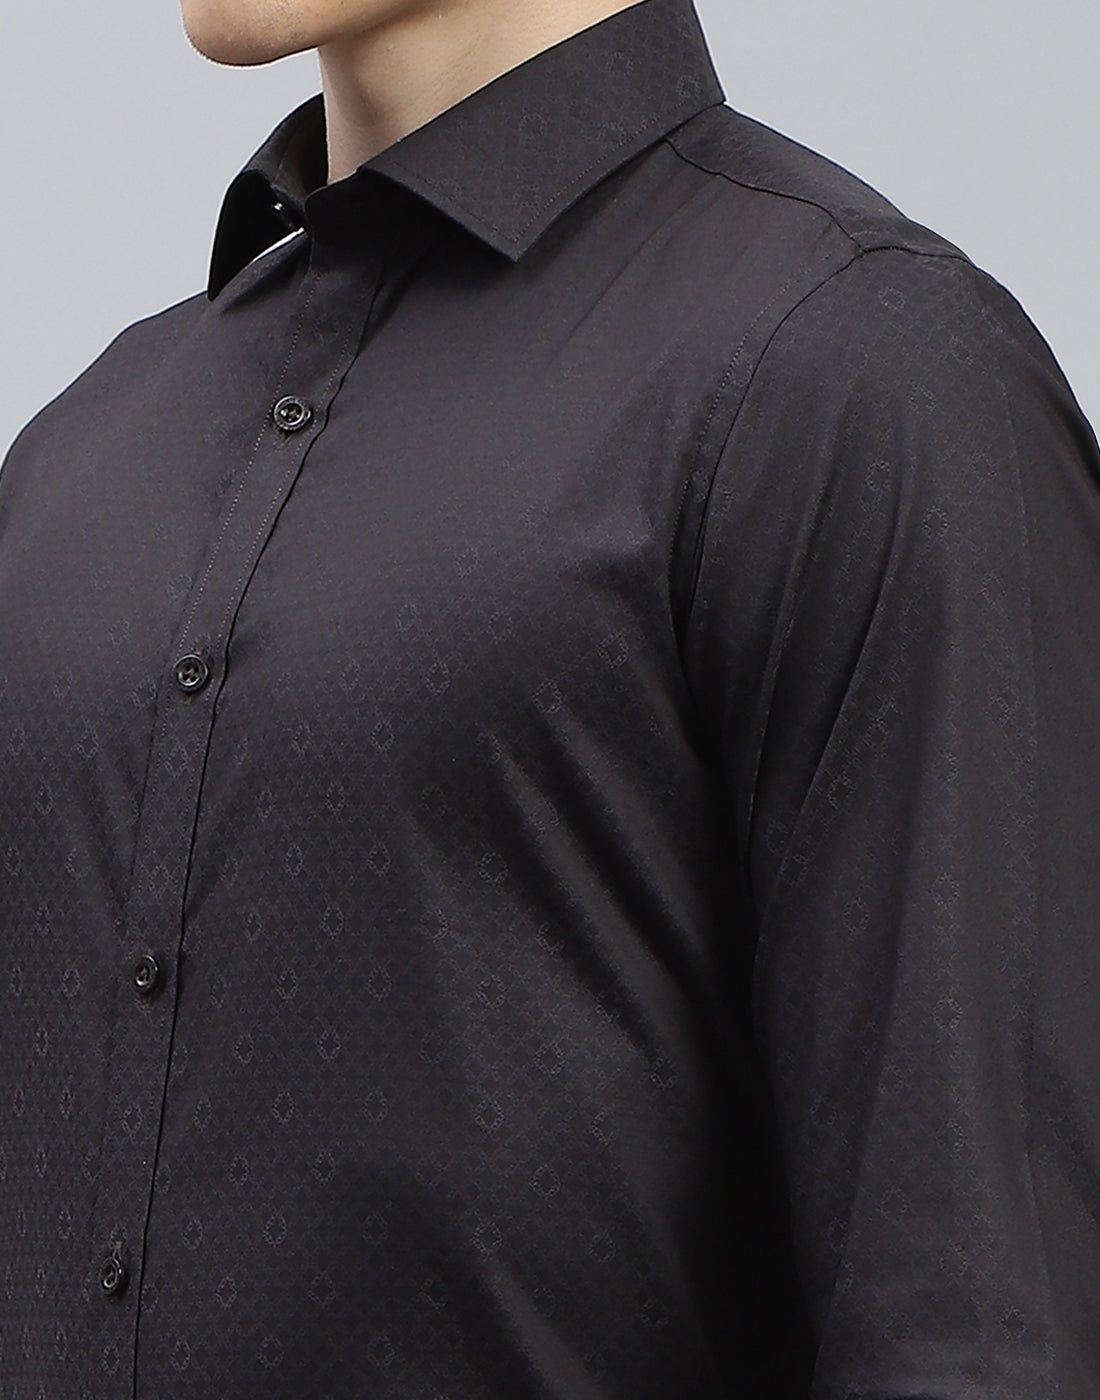 Men Black Printed Spread Collar Full Sleeve Shirt